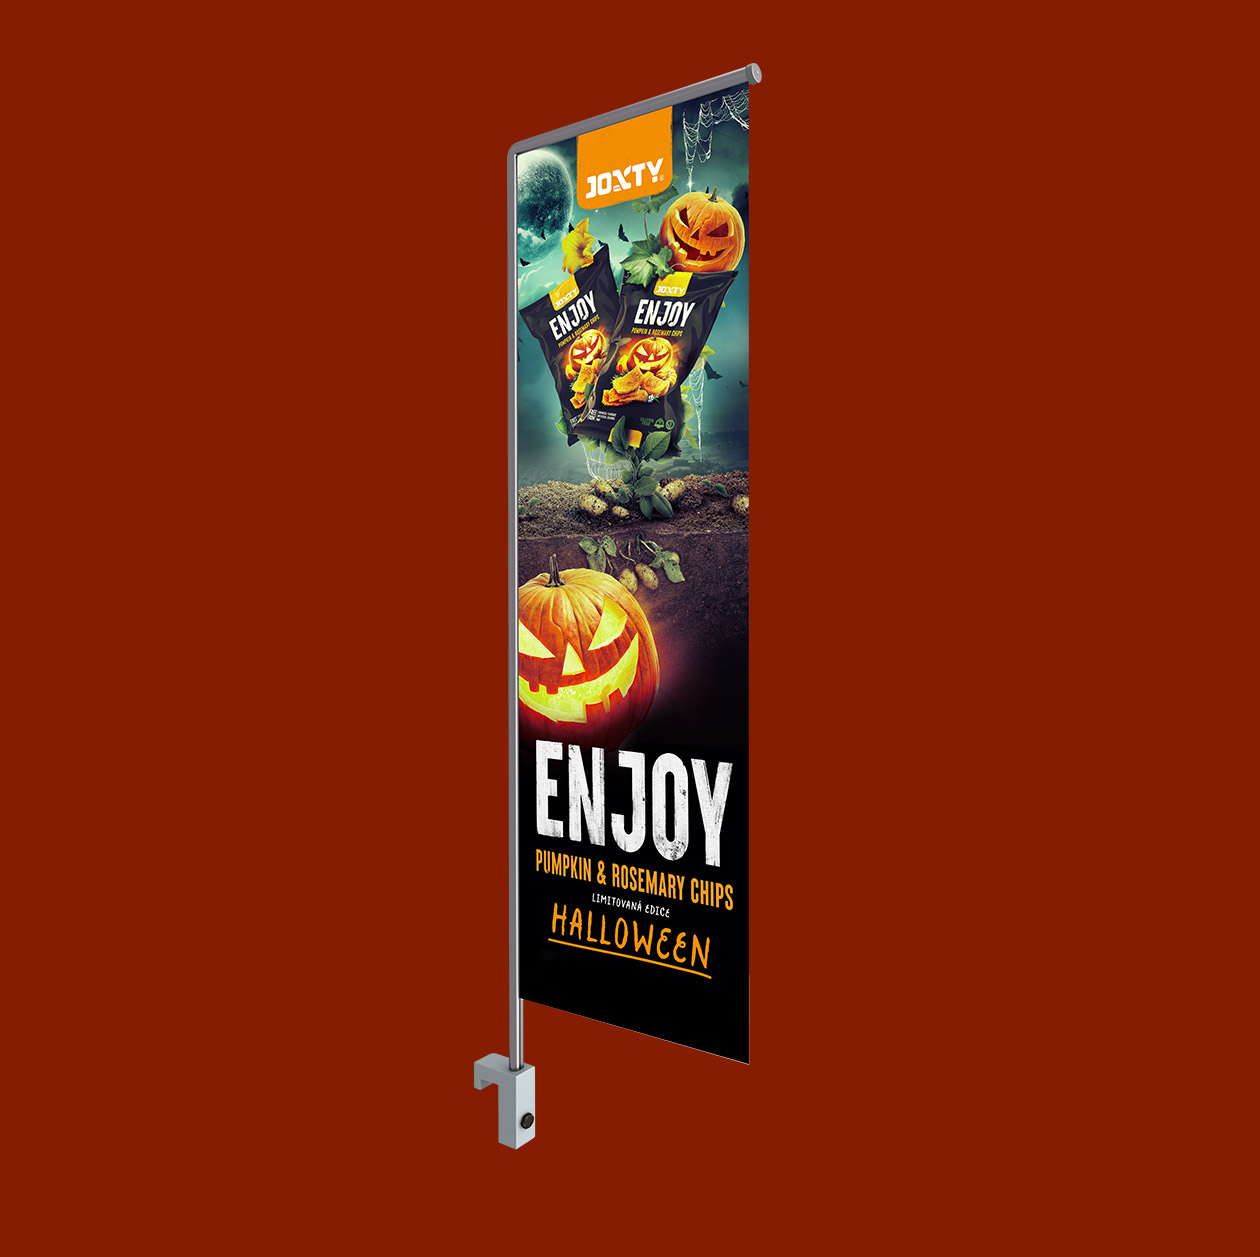 packaging enjoy chips halloween